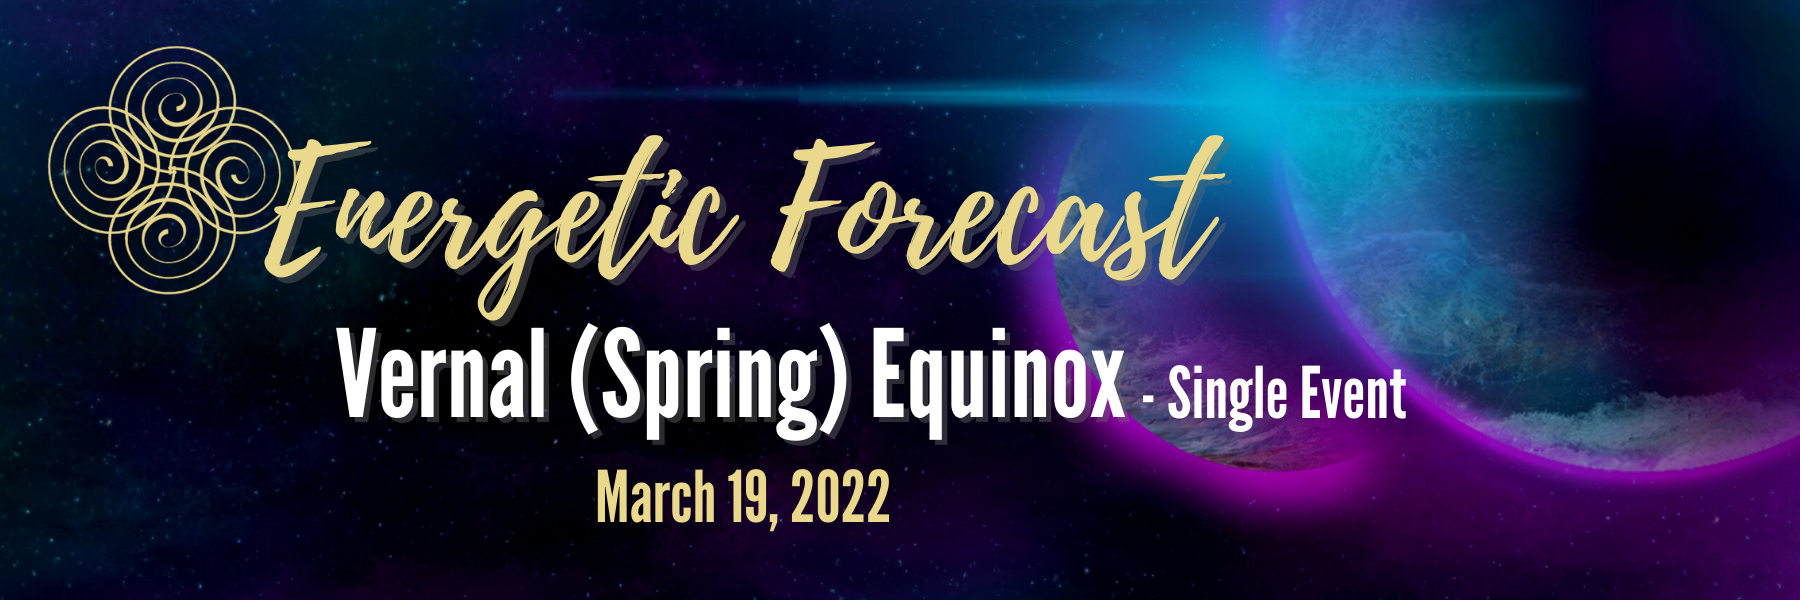 Energetic Forecast - Vernal (Spring) Equinox 2022 - Single Event